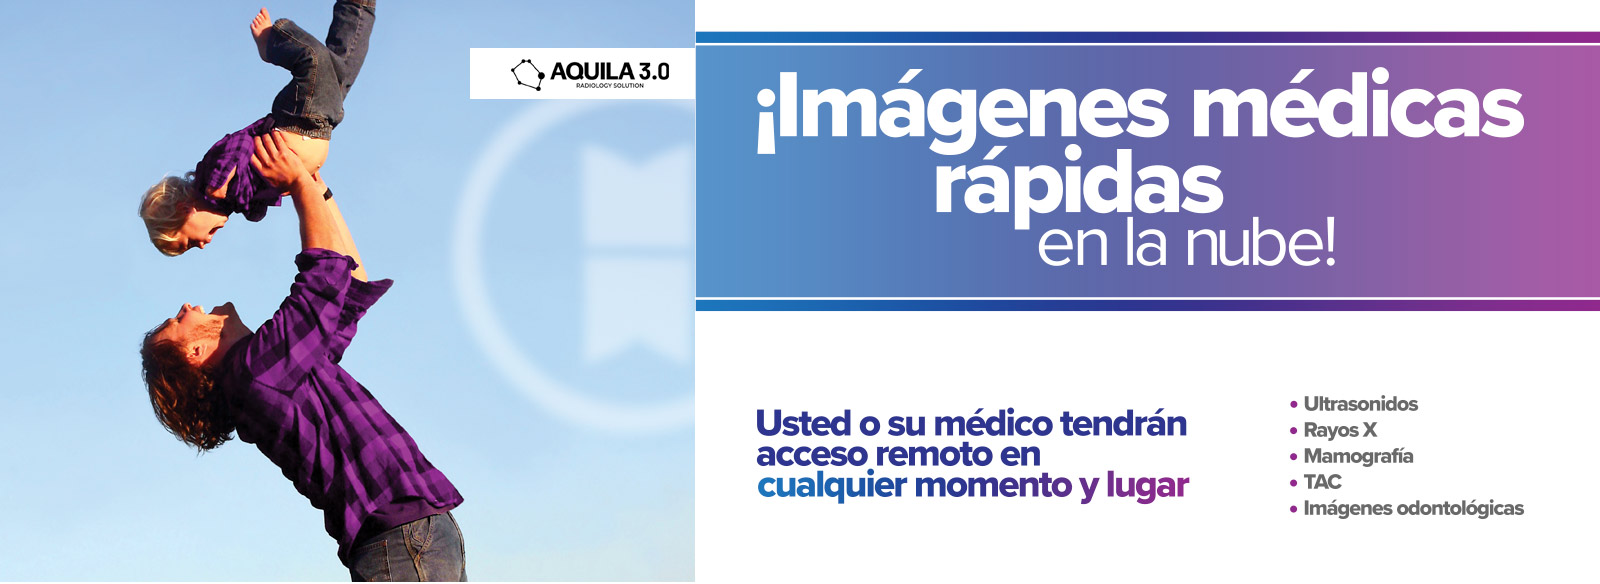 Imagenes Medicas - Aquila